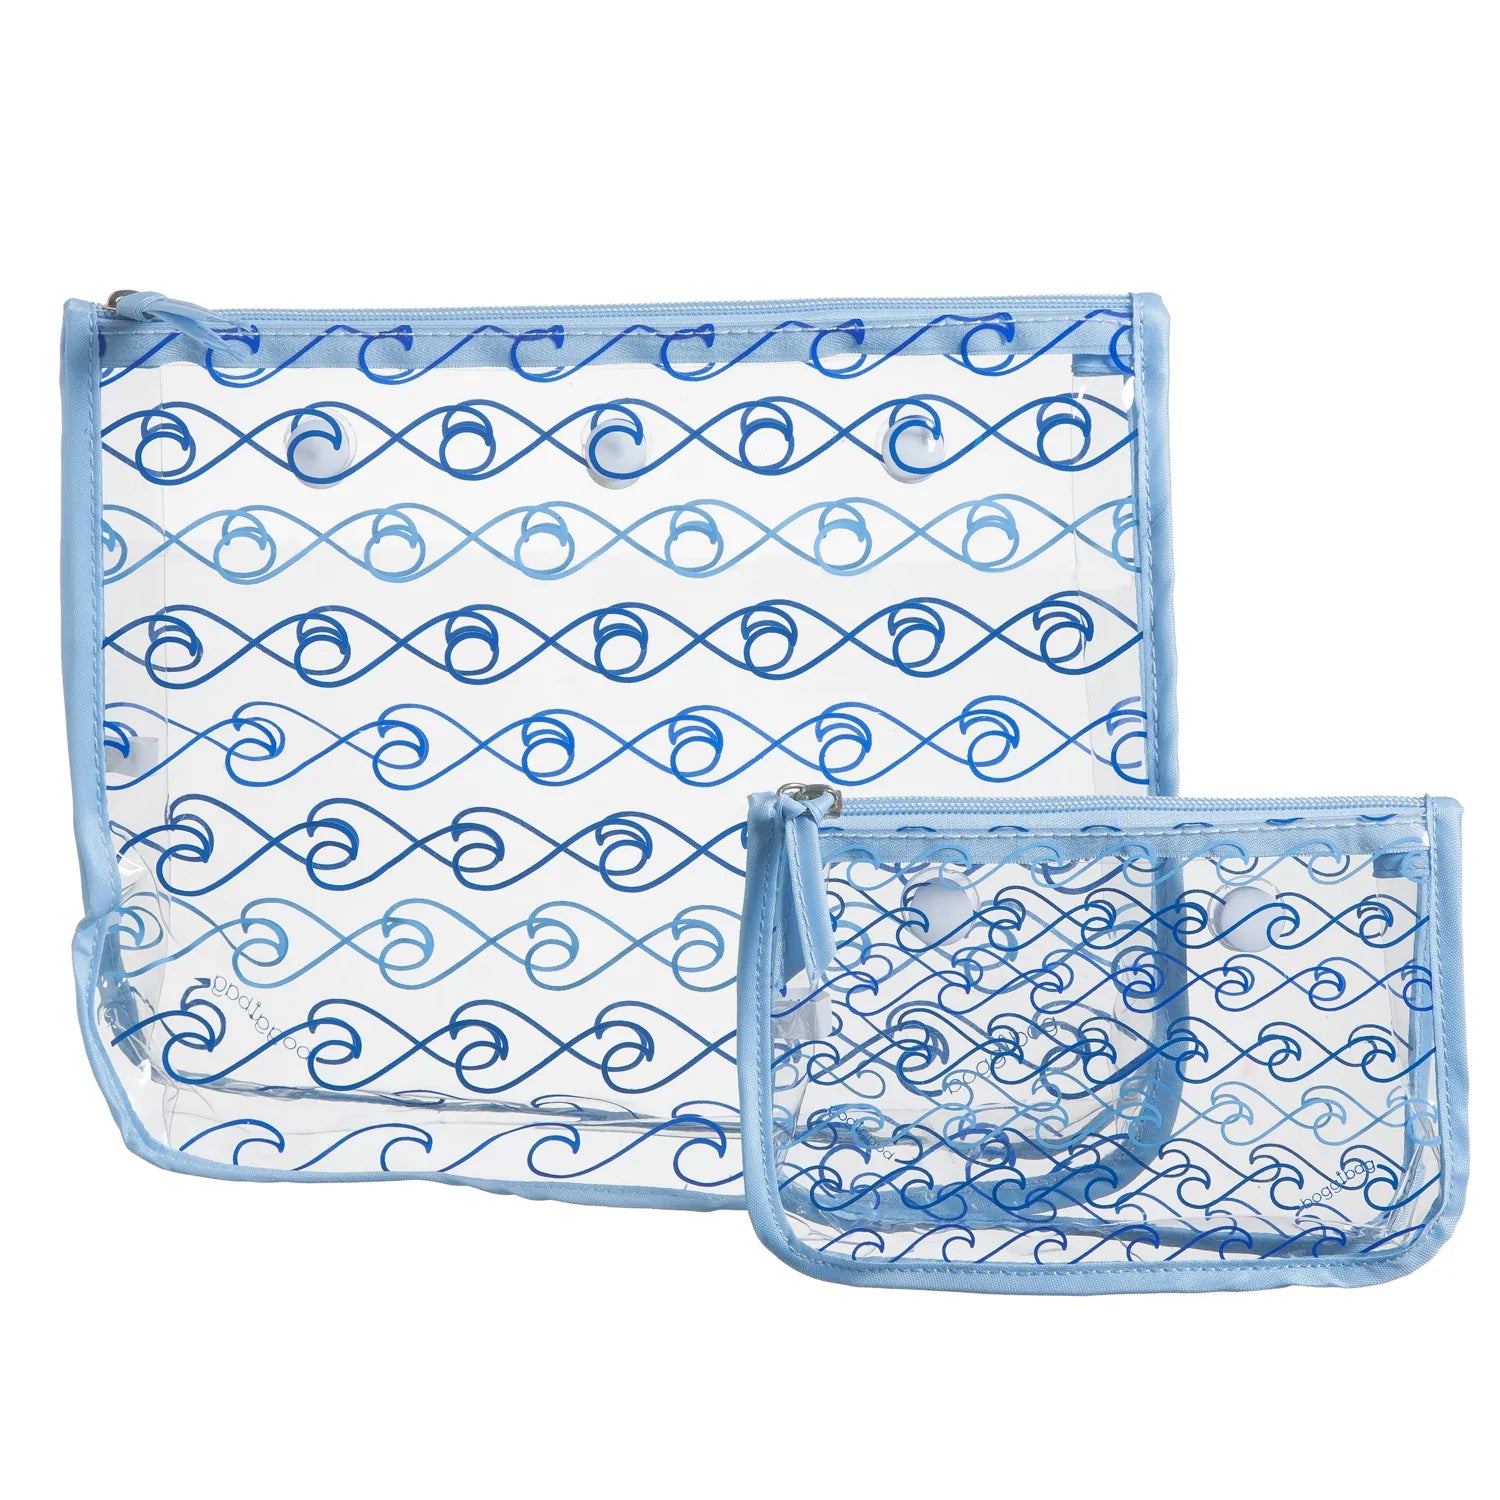 Bogg Bags Cooler Insert Blue – Crib & Kids